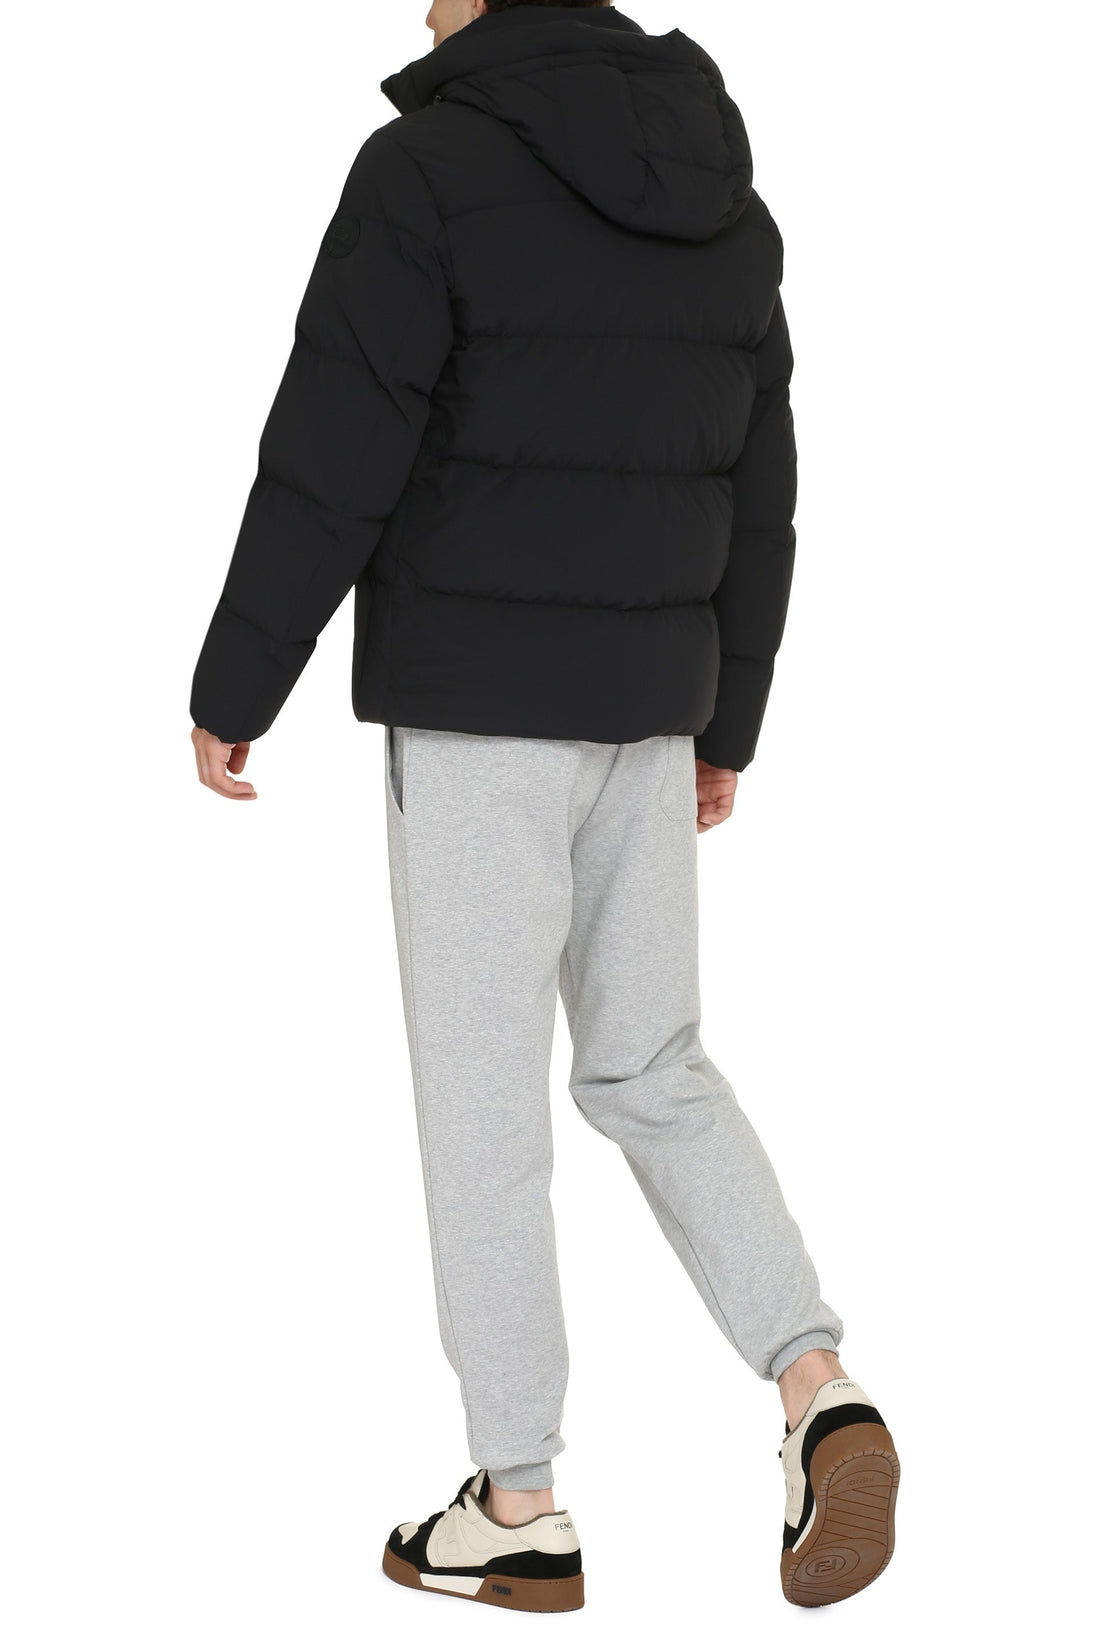 Woolrich-OUTLET-SALE-Sierra Supreme hooded nylon down jacket-ARCHIVIST